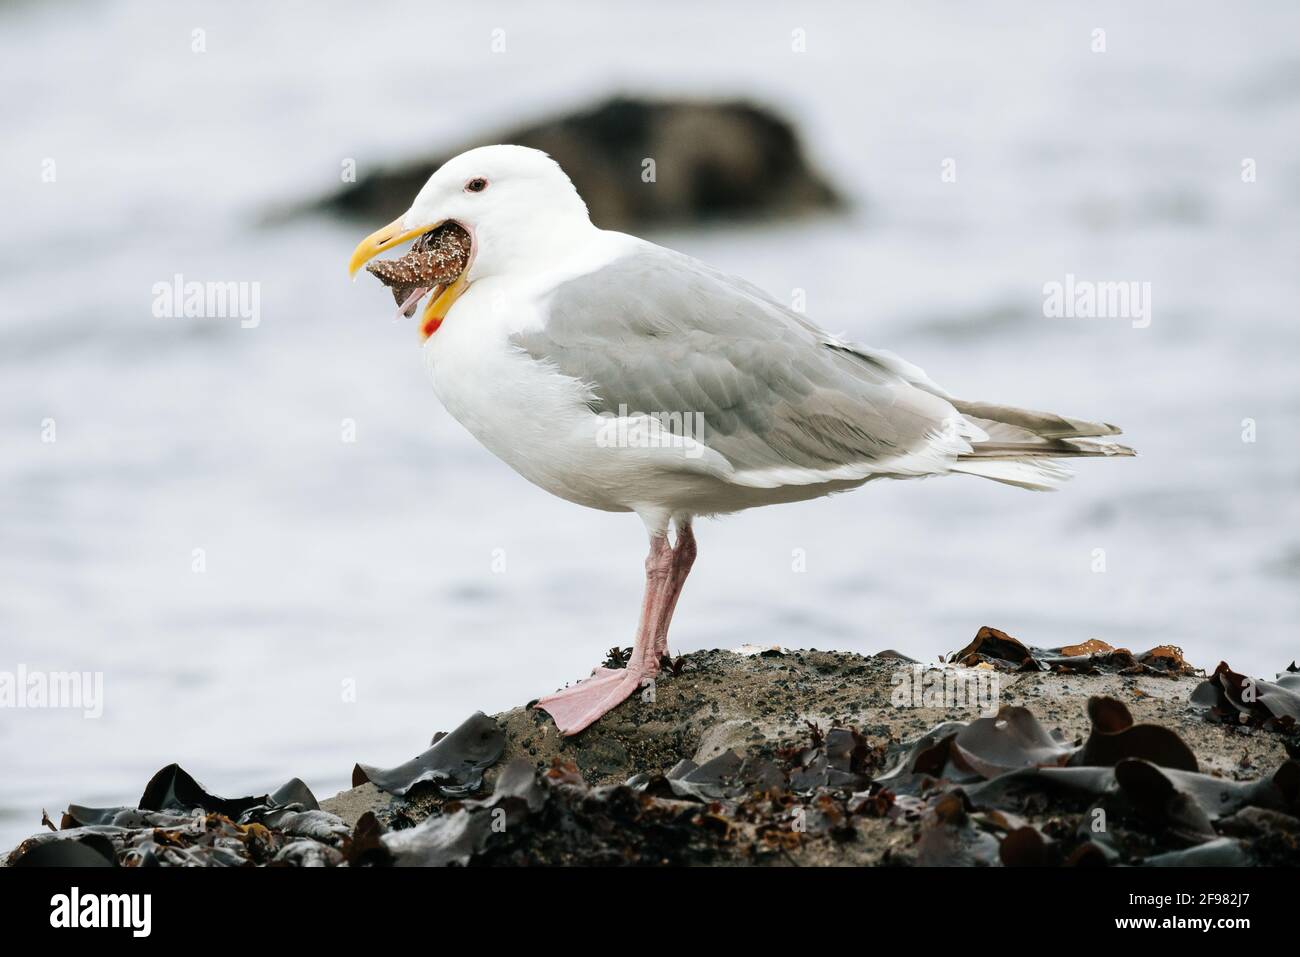 Closeup view of a sea gull eating a sea star Stock Photo